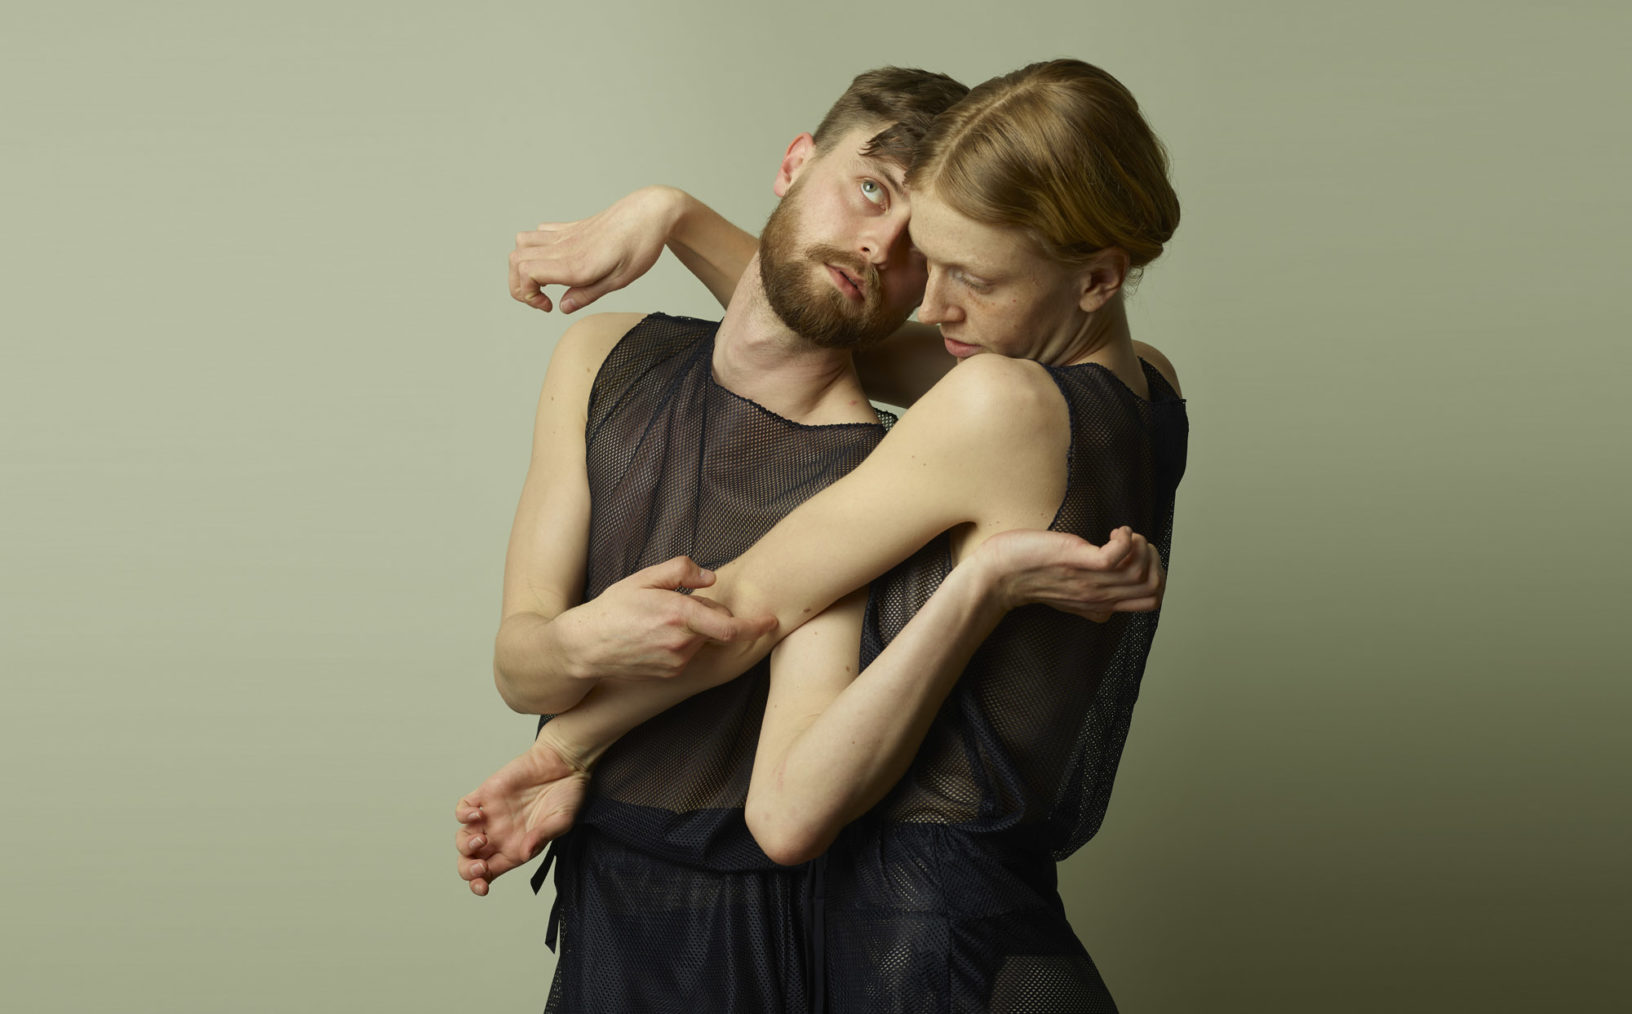 De to danserne i en positur fra forestillingen der de omfavner hverandre med armer og hender i vridde stillinger.